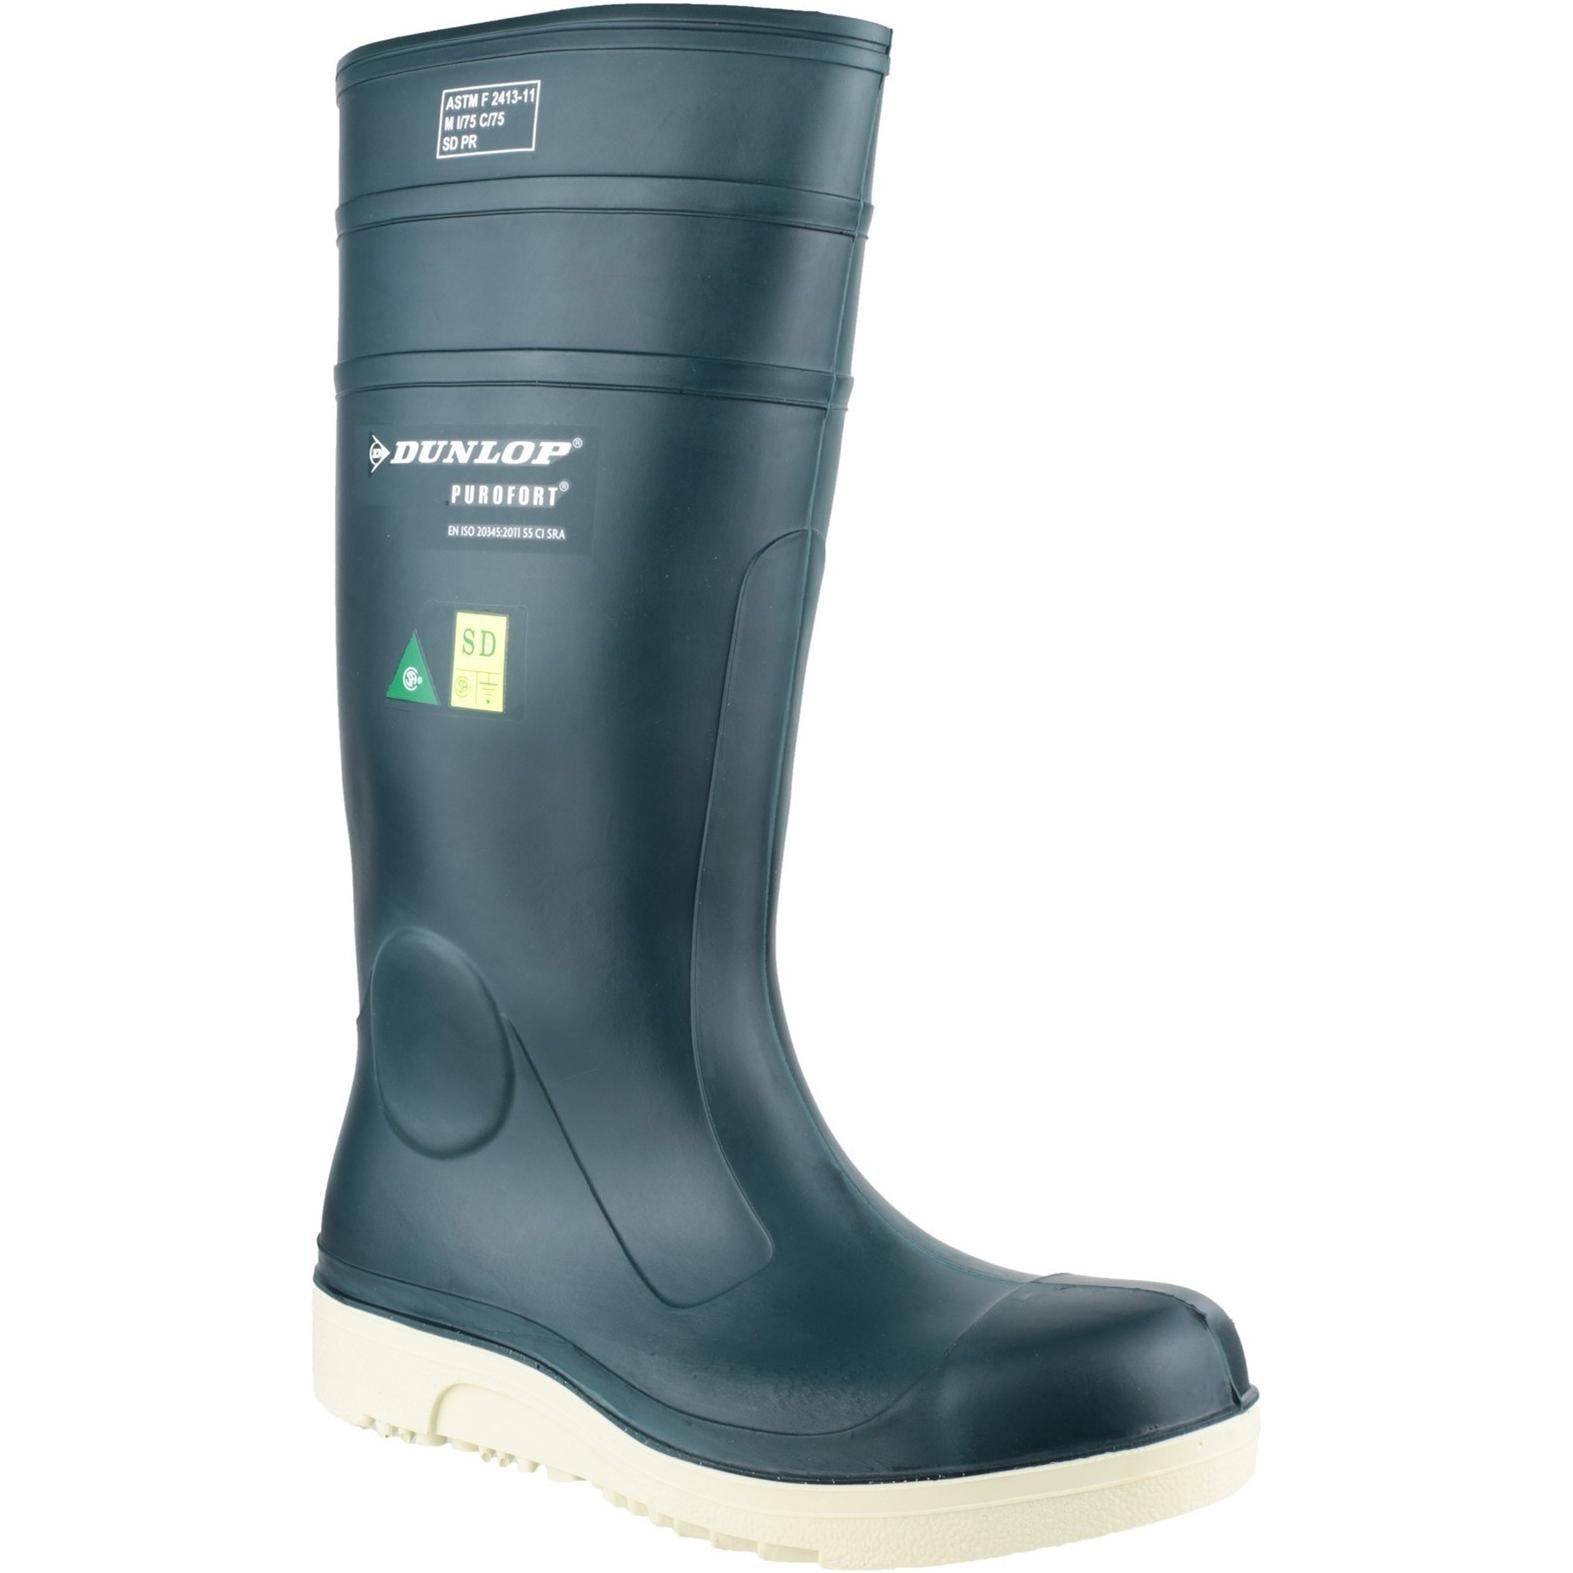 Dunlop Purofort Comfort Grip Full Safety Wellington Boots